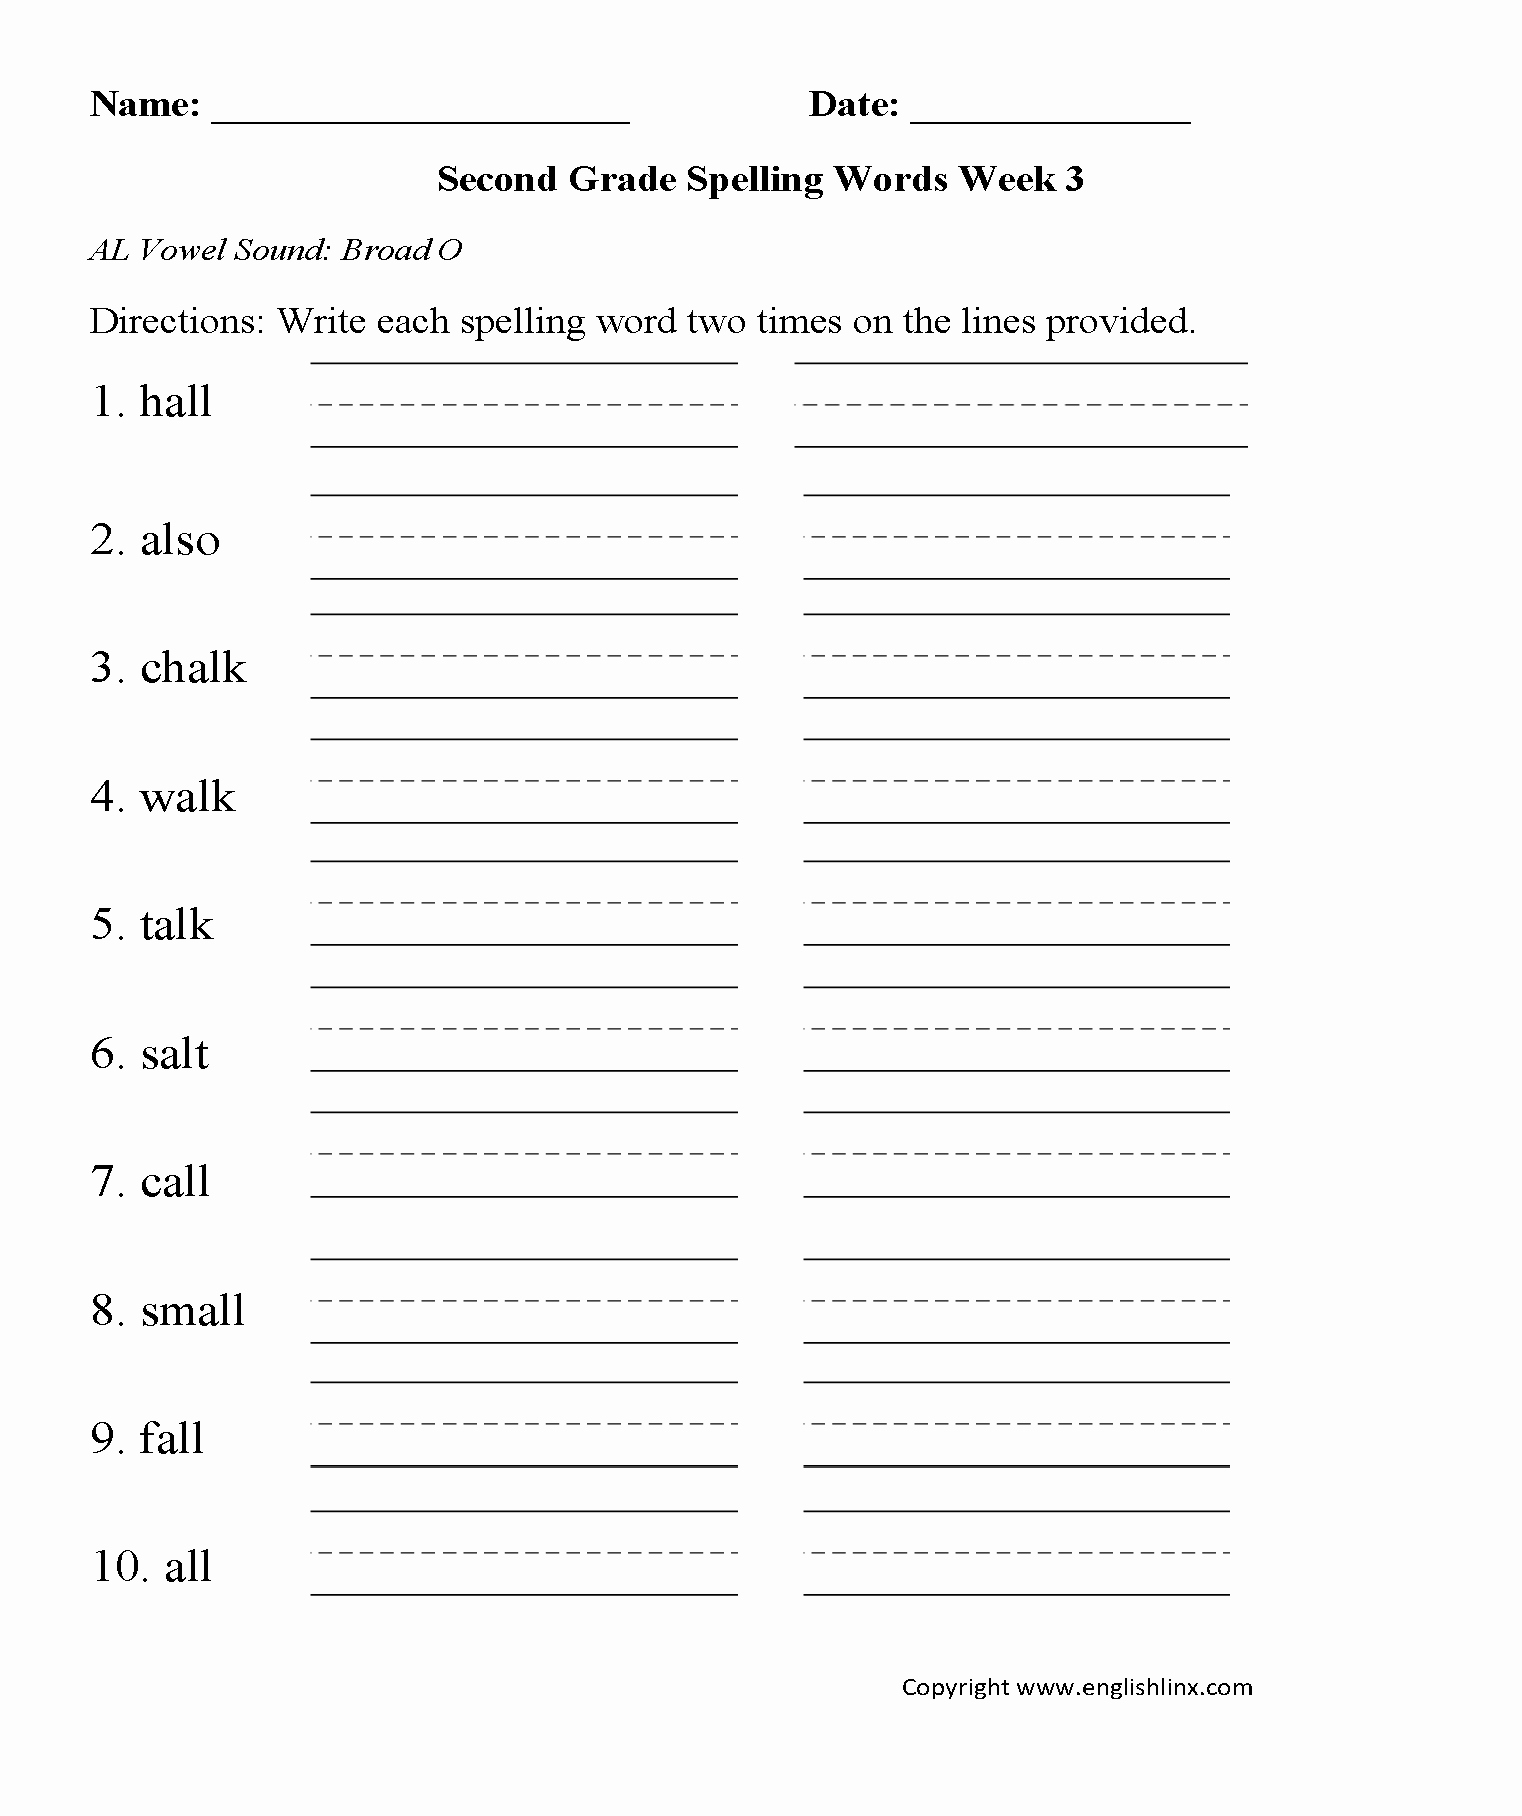 Second Grade Spelling Worksheets Best Of Second Grade Spelling Worksheets with Images